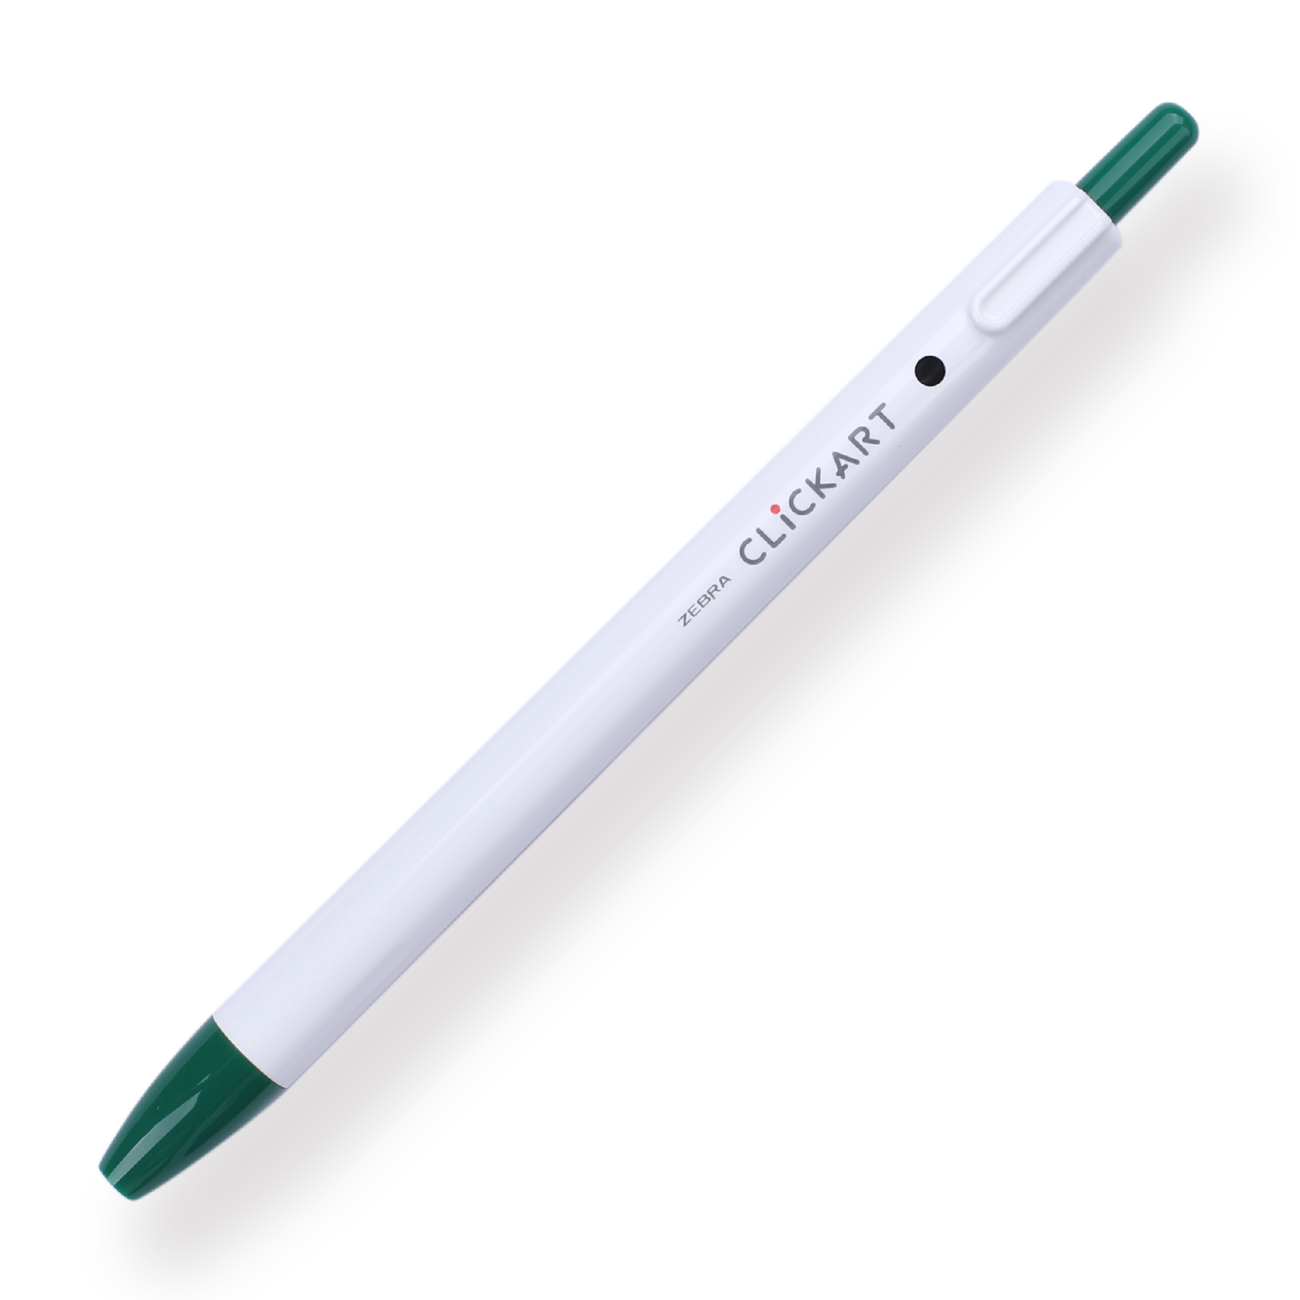 Zebra Fountain Pen 0.6mm- Green